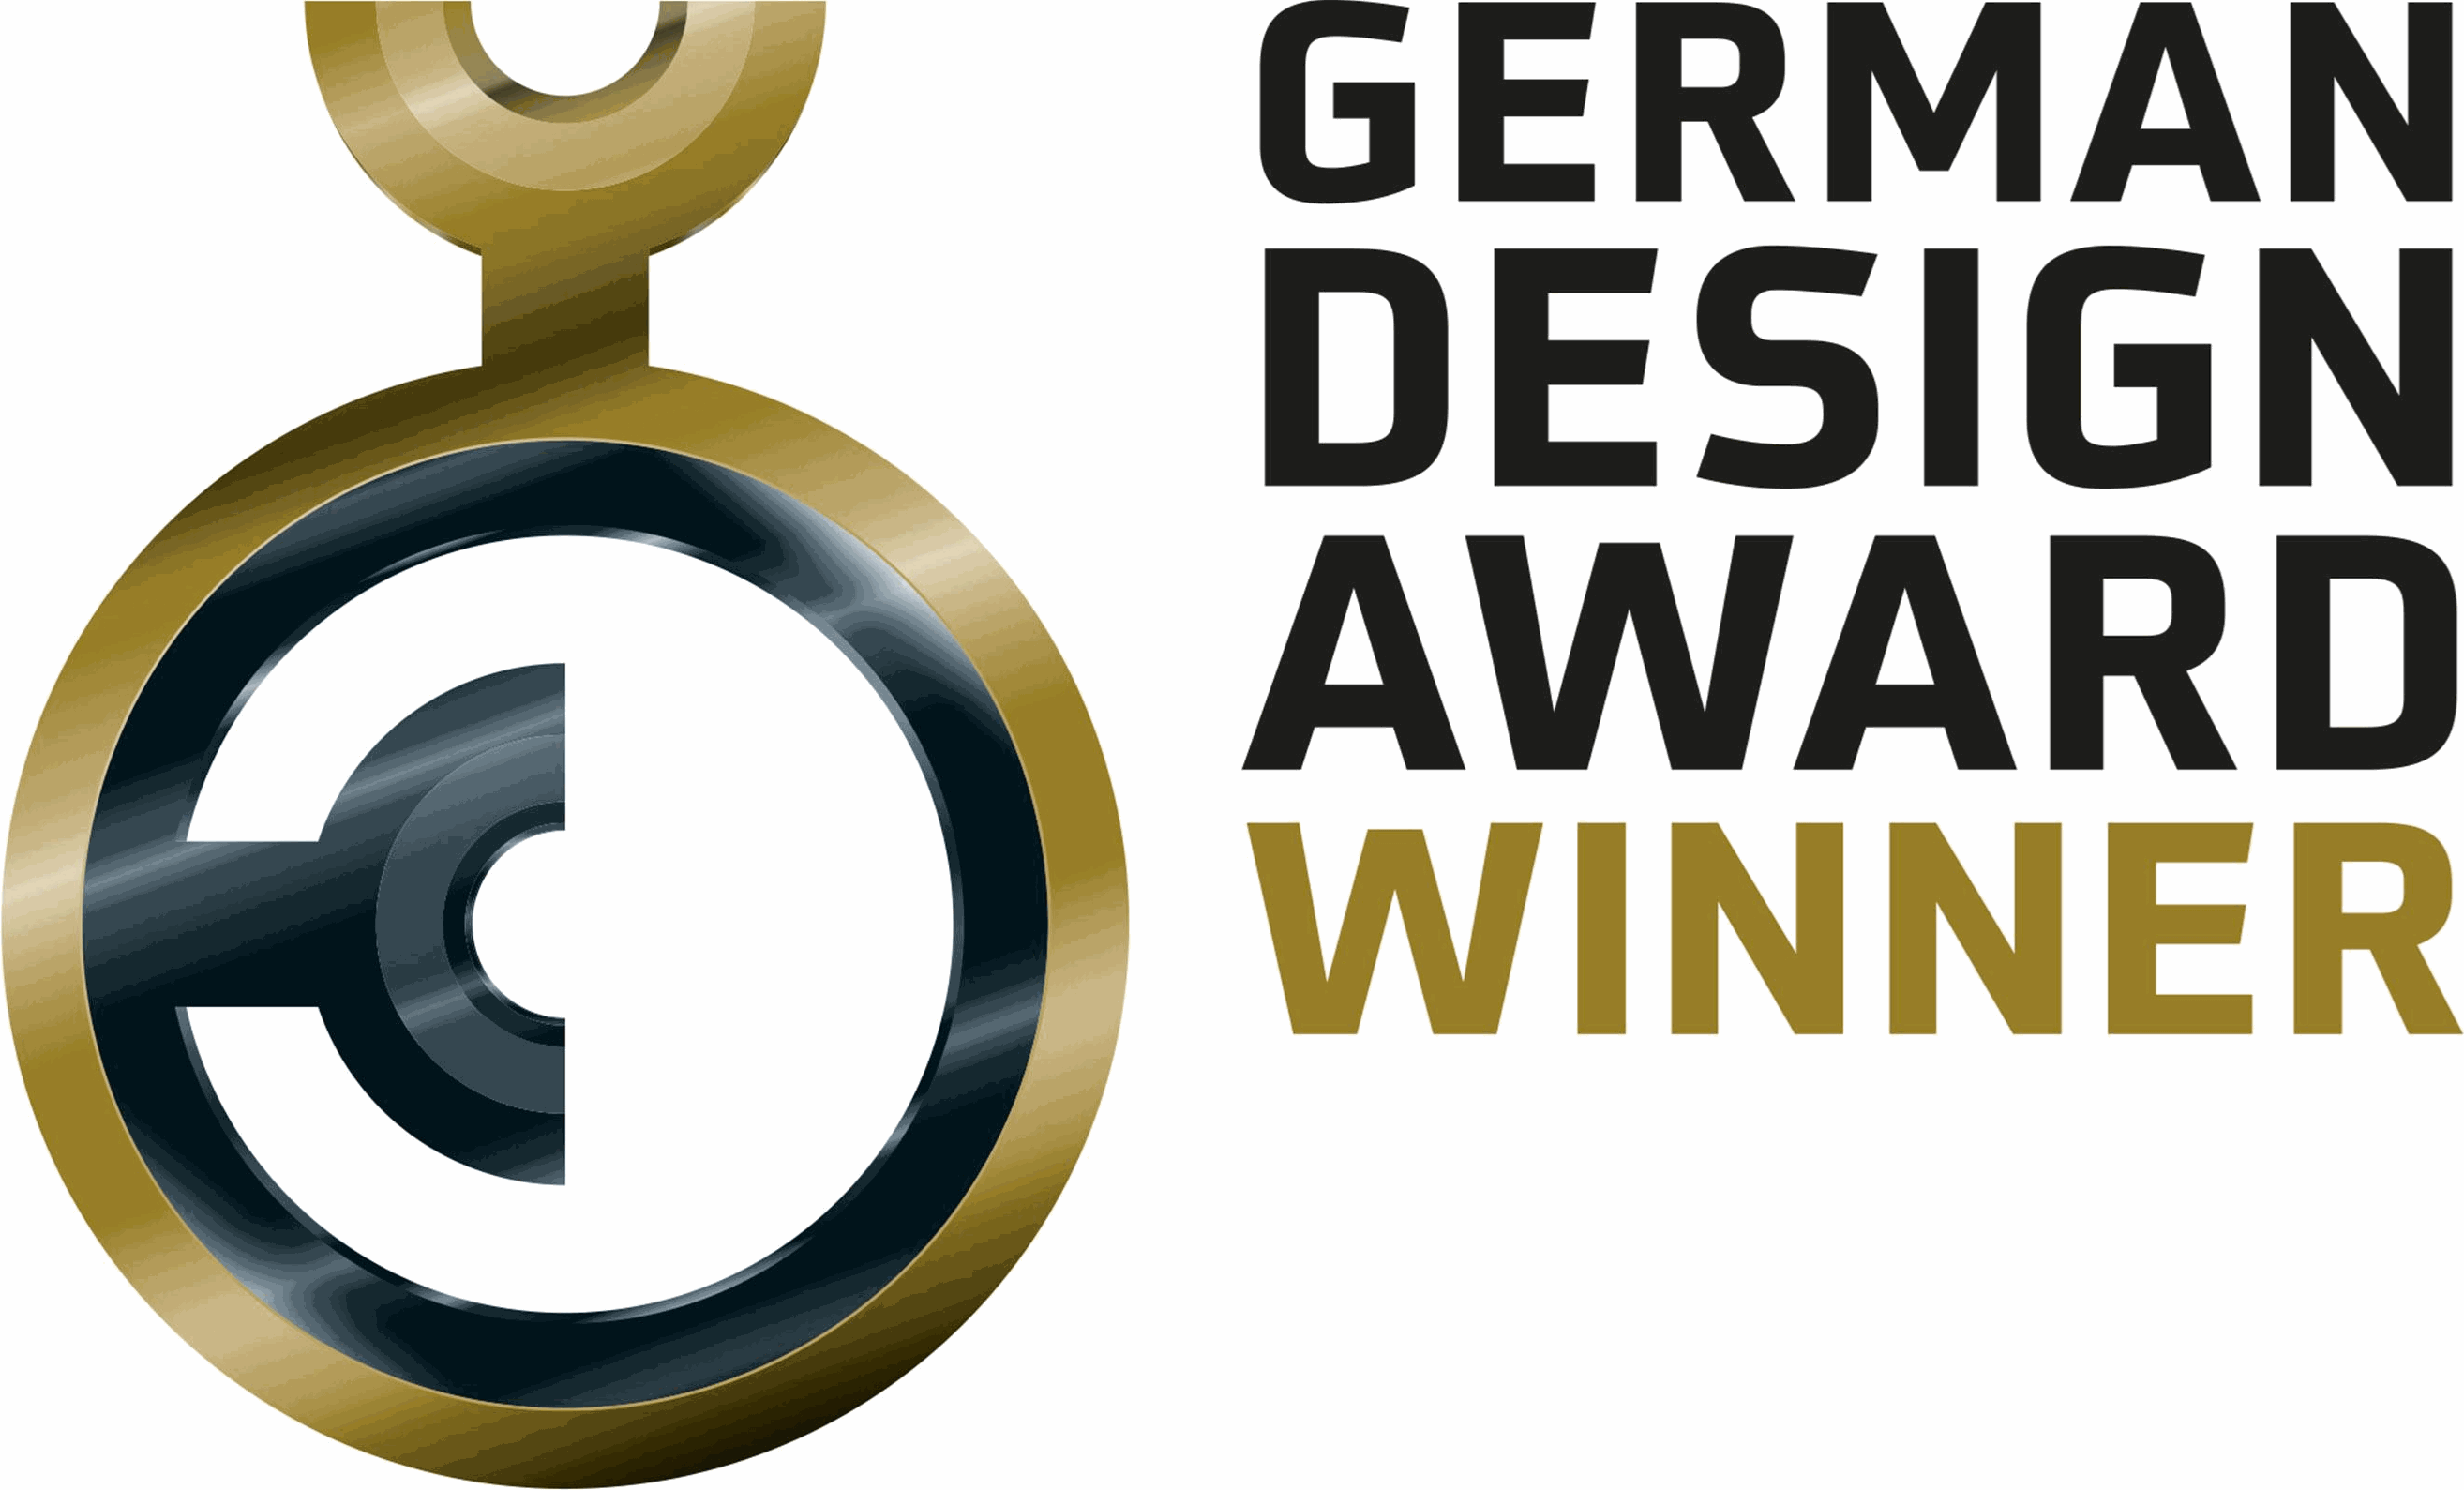 German Design Award – Winner